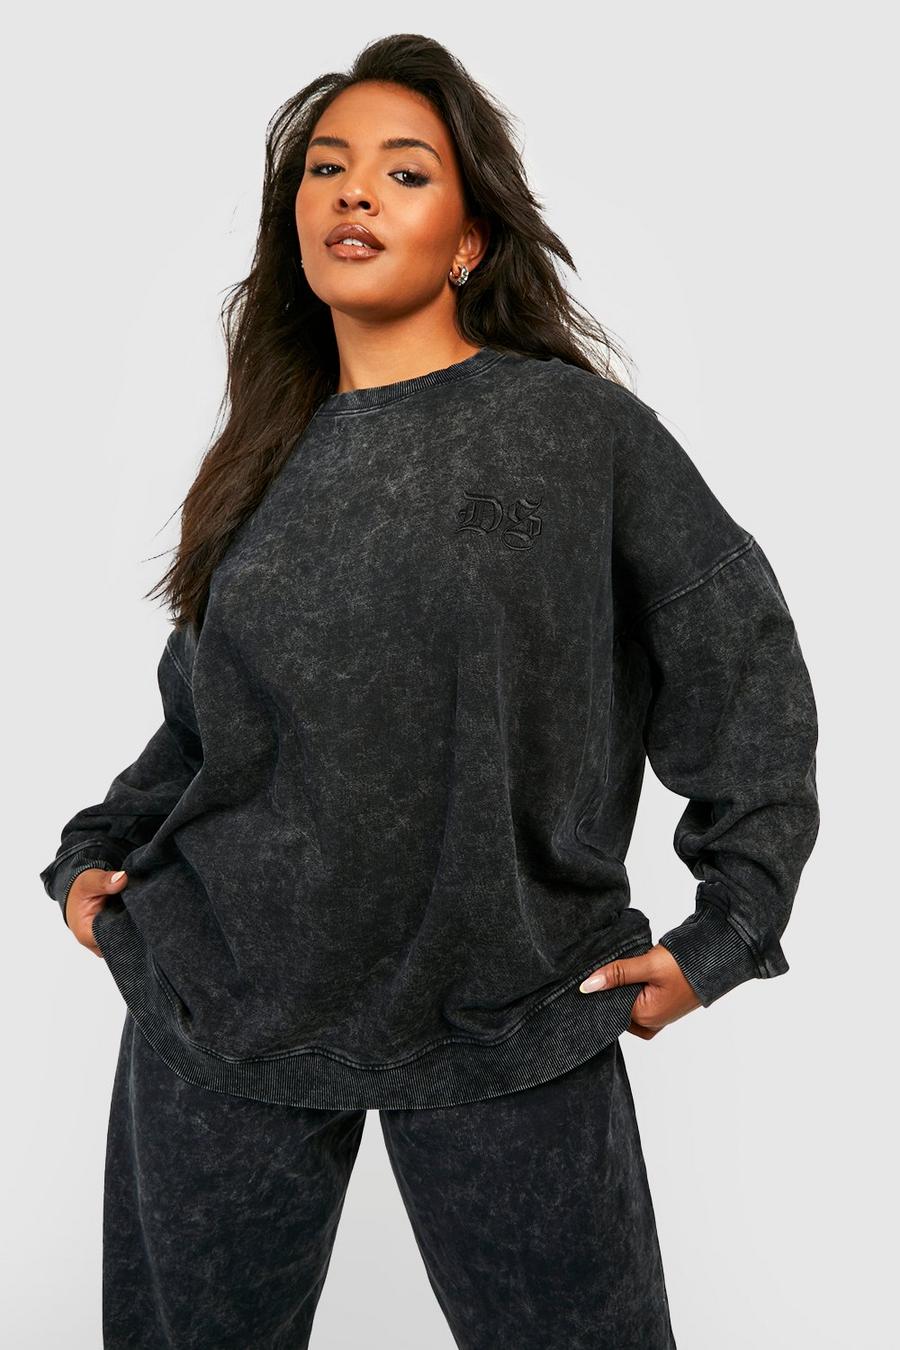 Frauenschuh Sweatshirt braun Casual-Look Mode Sweats Sweatshirts 